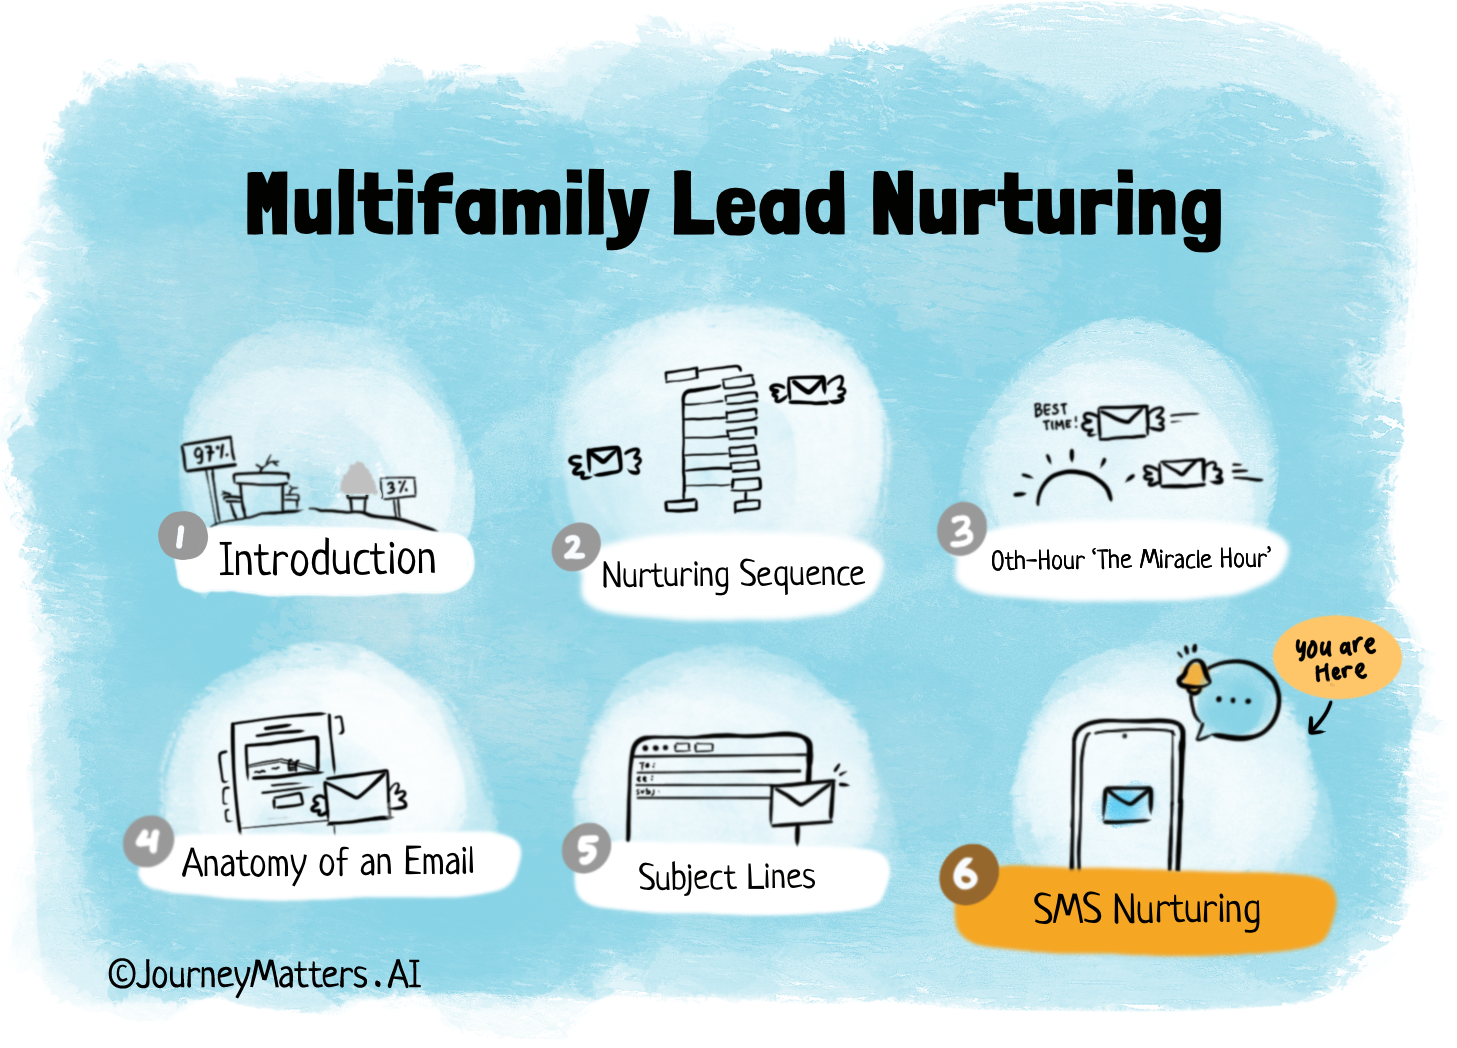 Multifamily lead nurturing series article the power of SMS nurturing